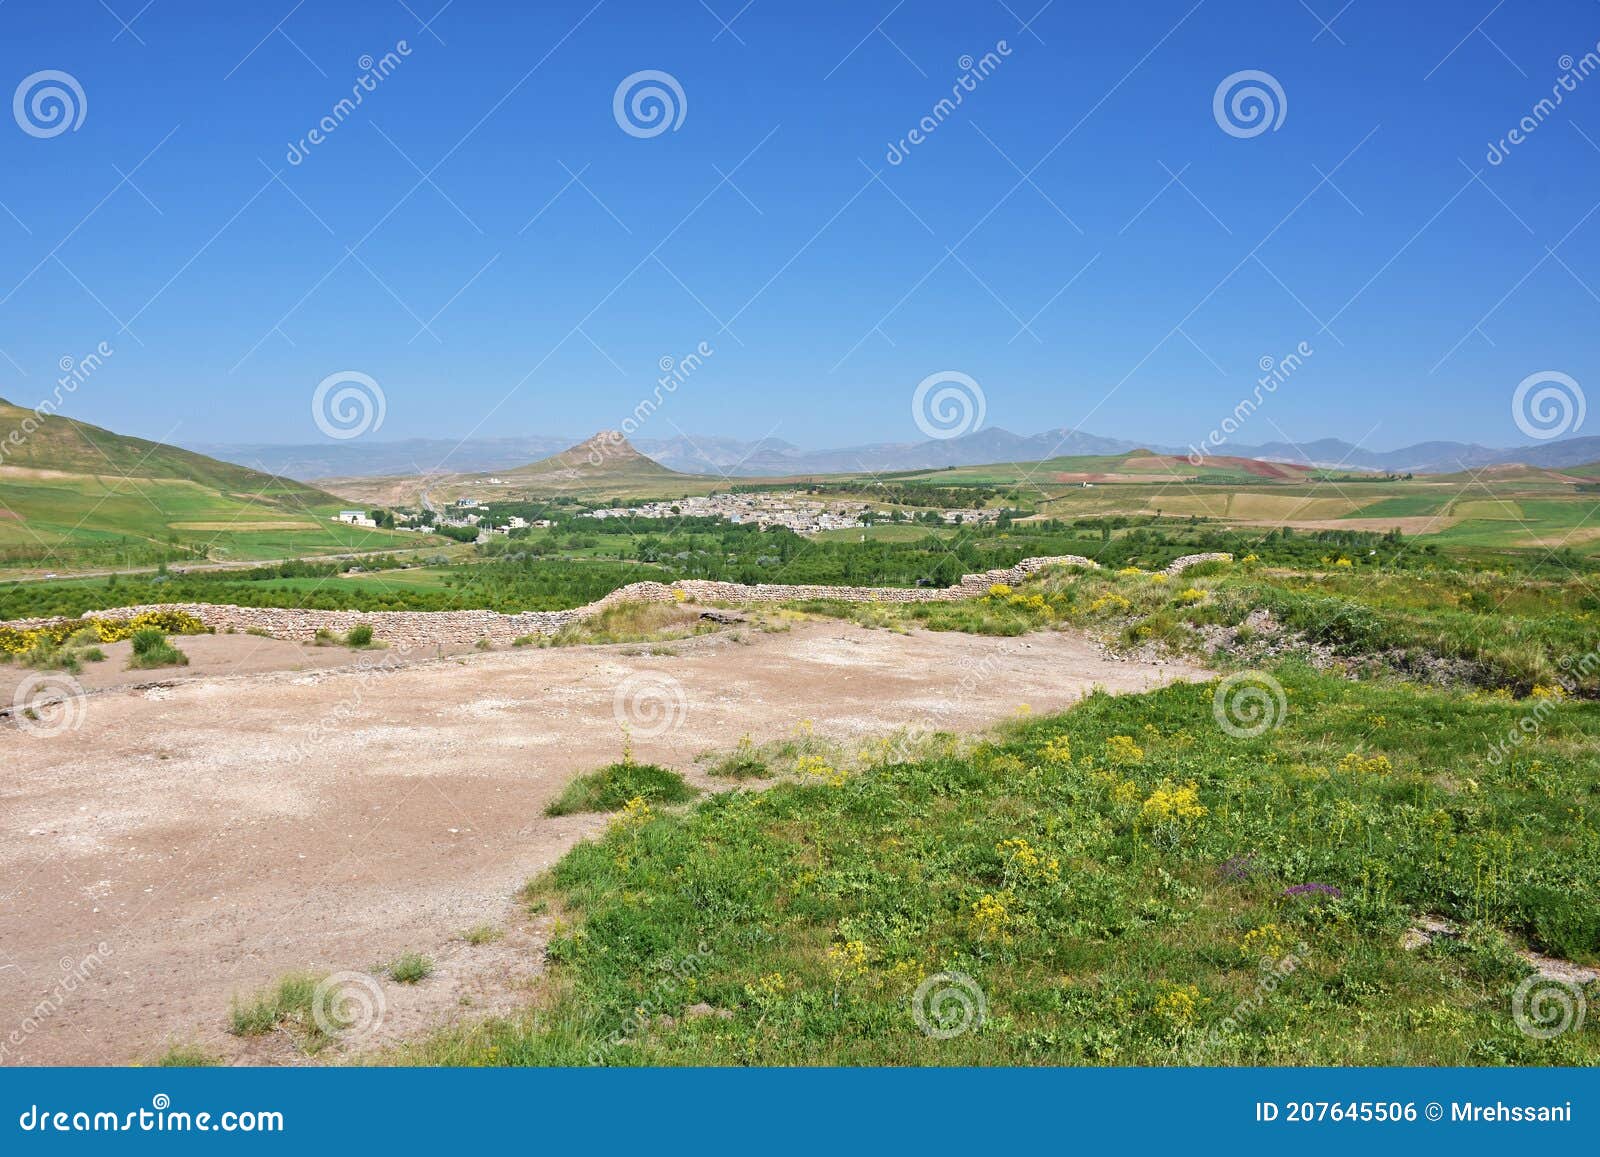 zendan-e soleyman or prison of solomon peak and historical wall of takht-e soleiman in takab